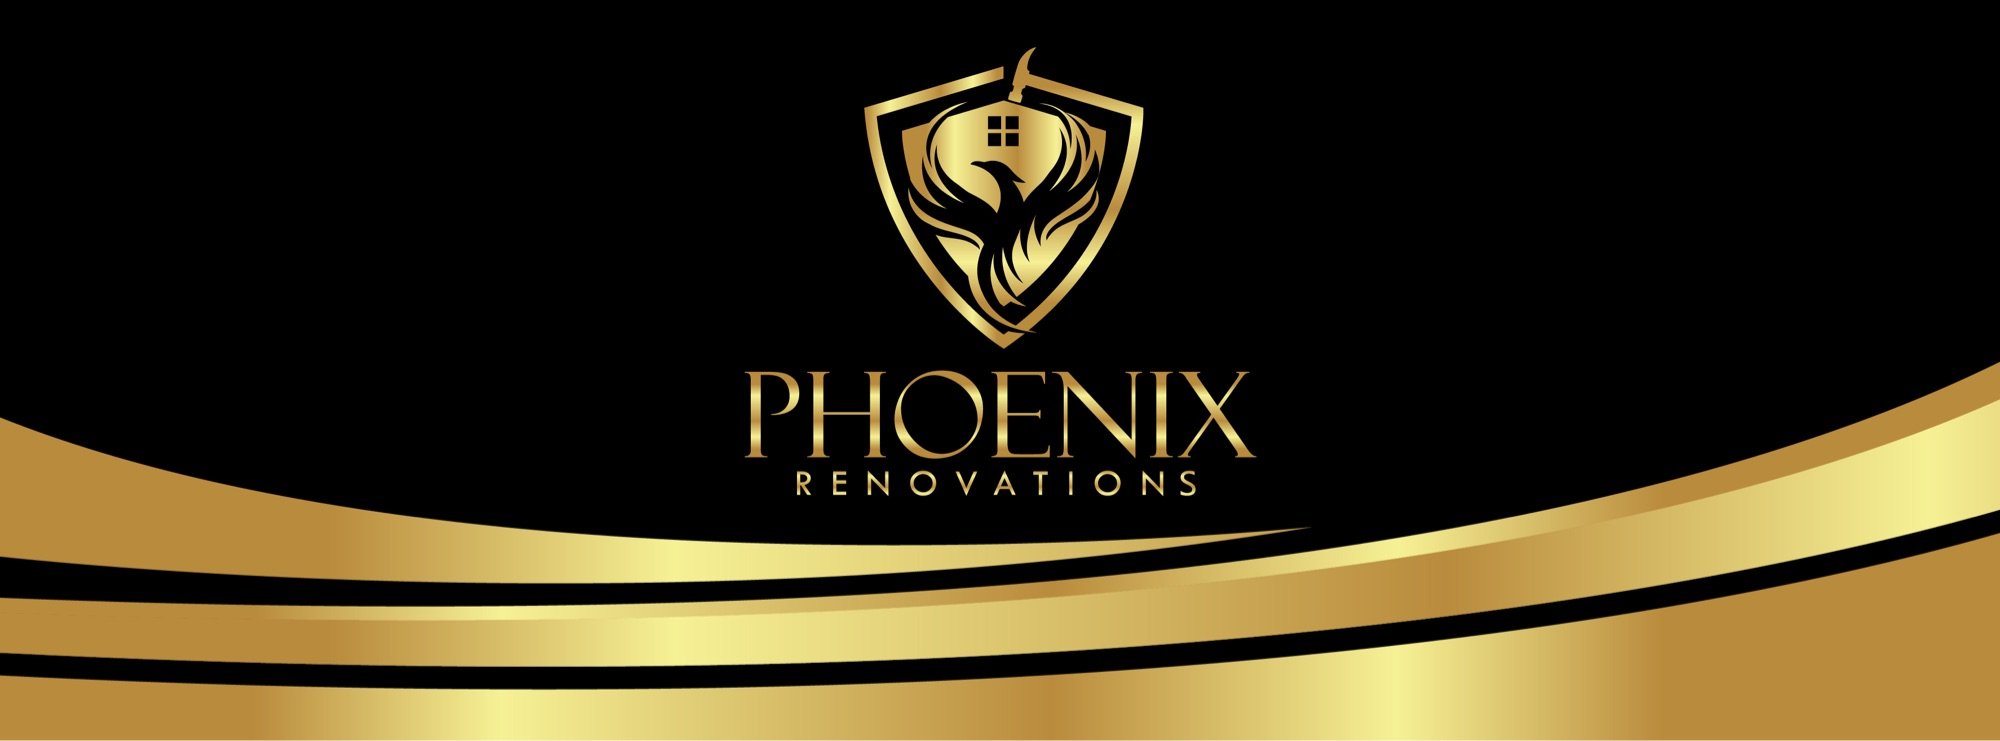 Phoenix Renovations Logo